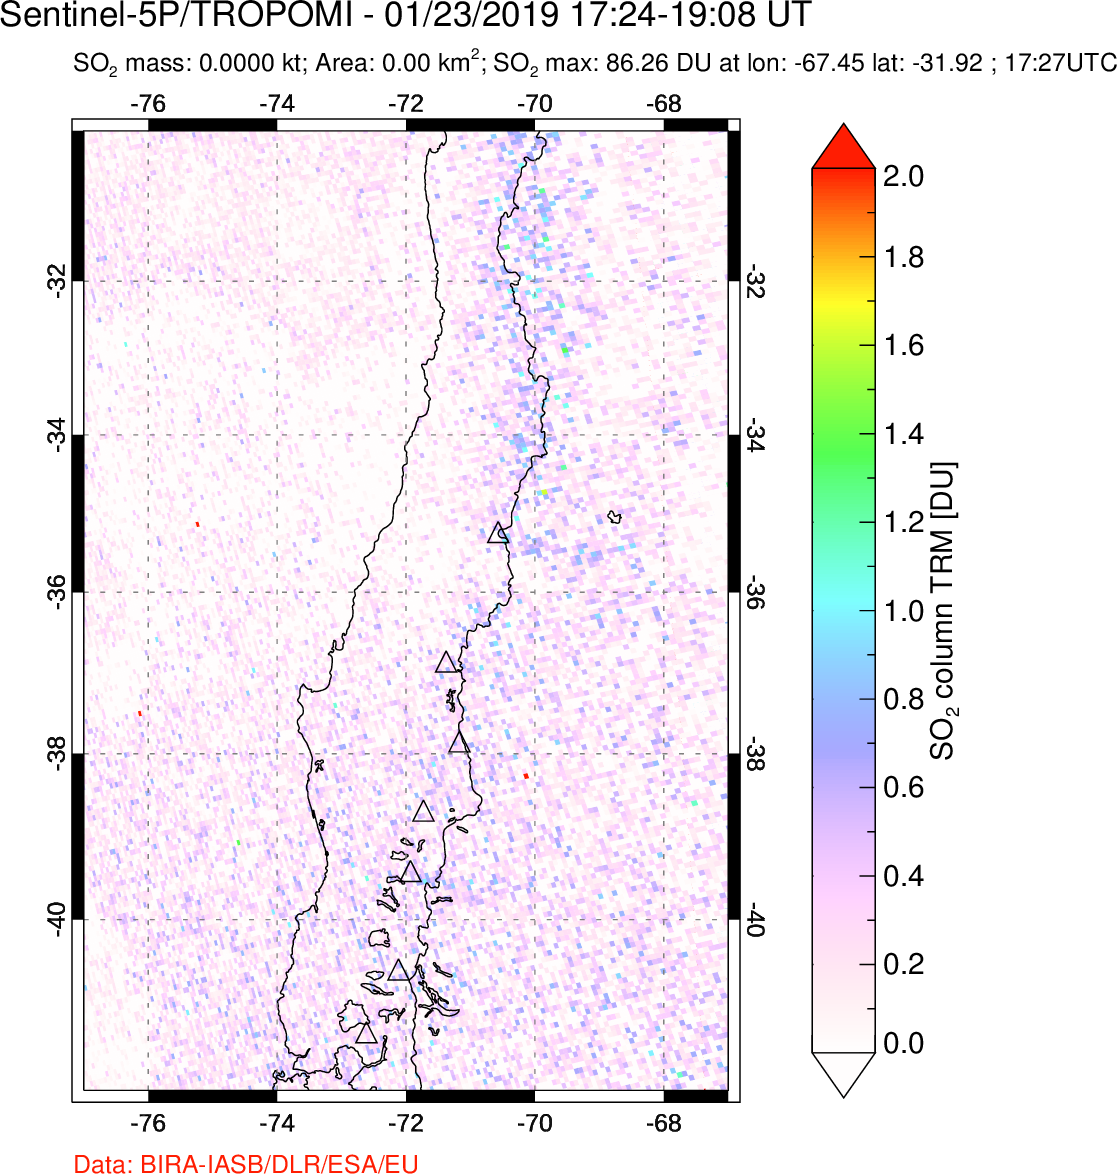 A sulfur dioxide image over Central Chile on Jan 23, 2019.